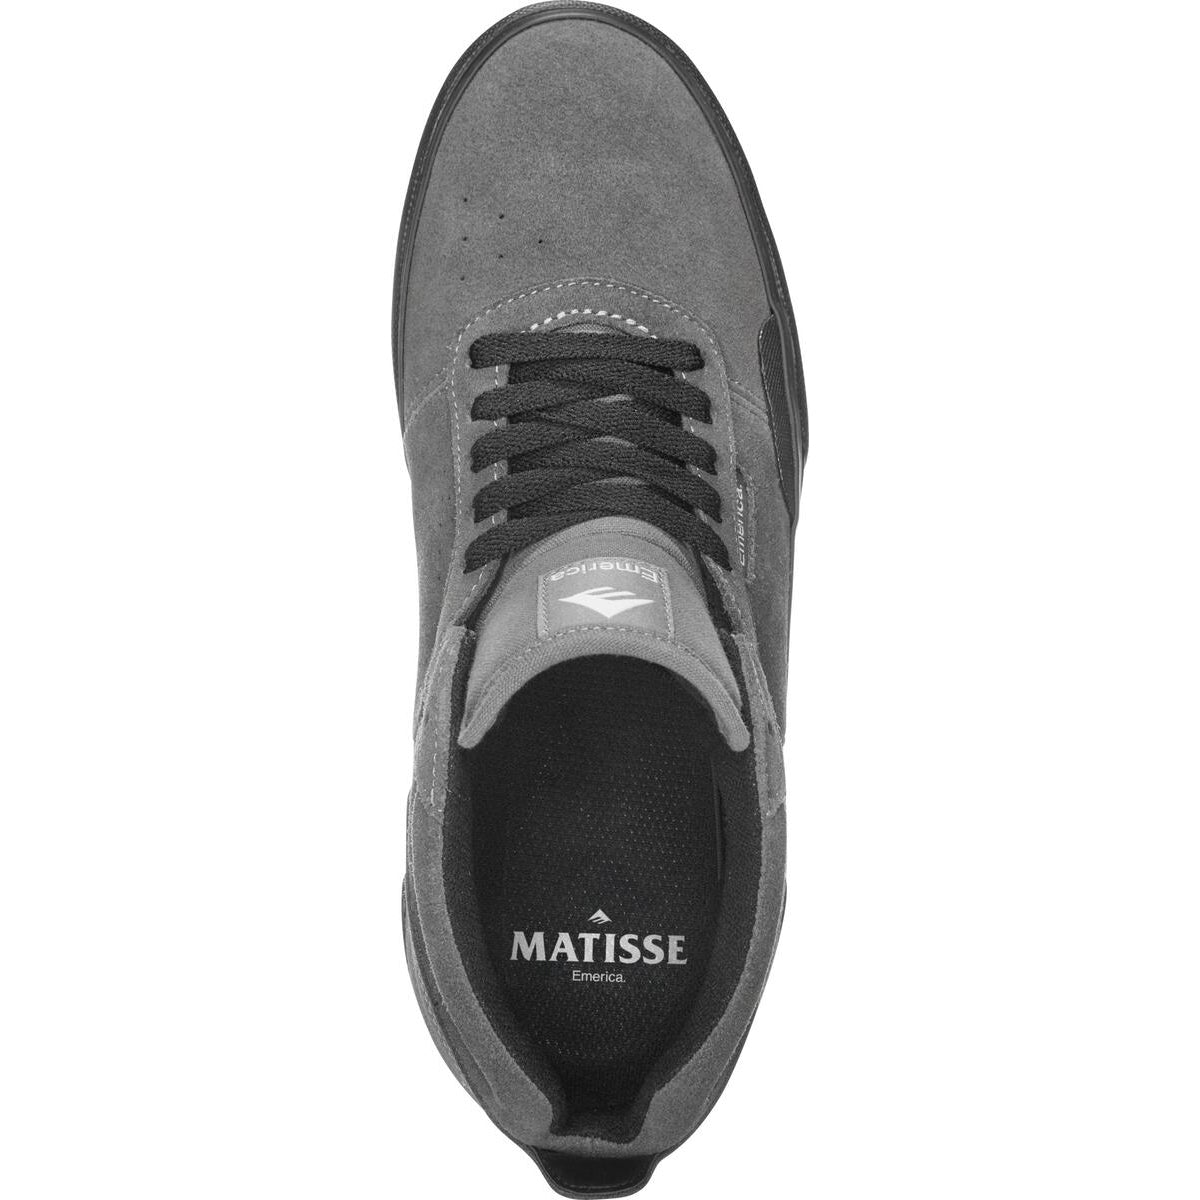 Emerica Matisse Banc Pillar Grey/Black Shoes